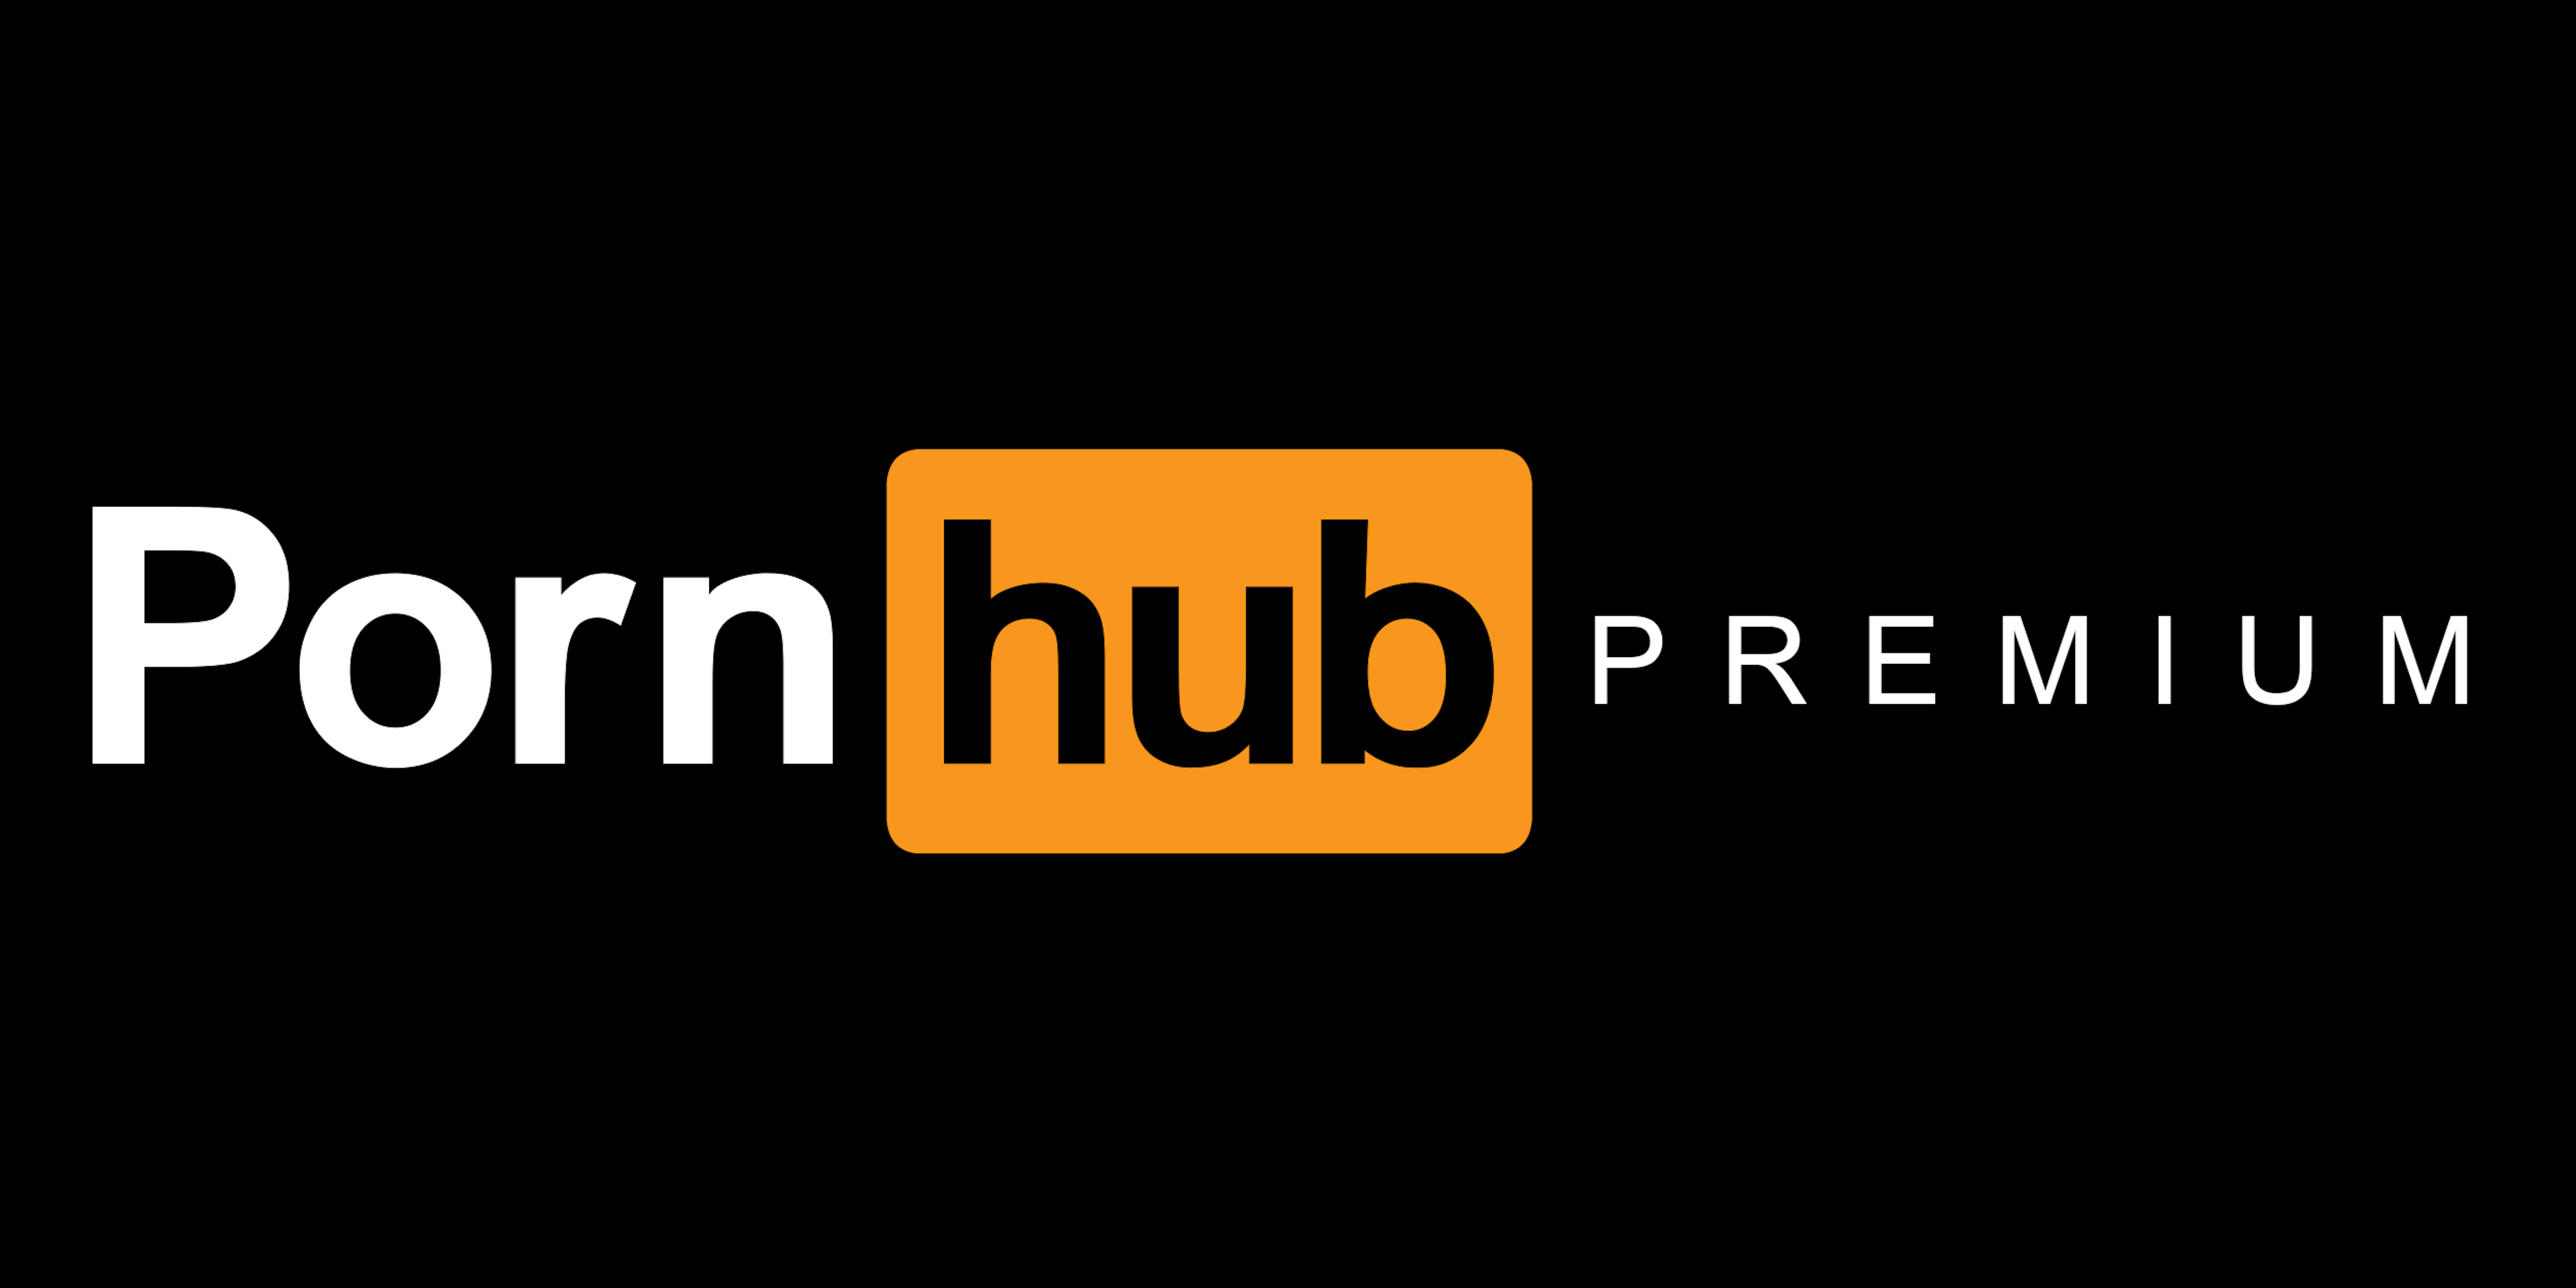 Pron Hup Com - YouTube bans Pornhub's channel for 'multiple violations' | Mashable